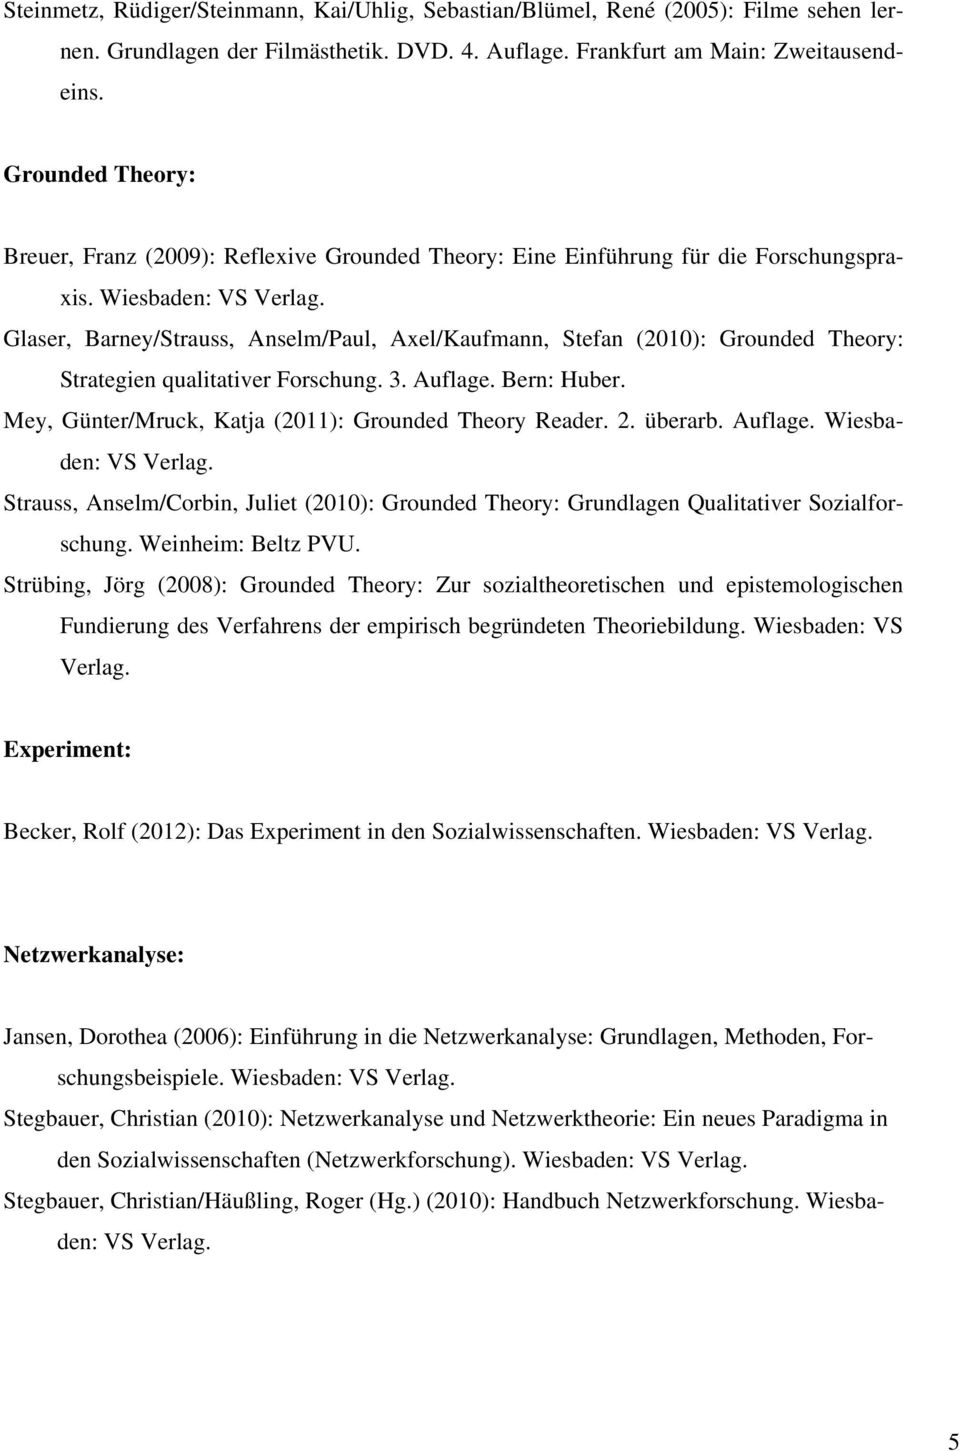 Wiesbaden: Glaser, Barney/Strauss, Anselm/Paul, Axel/Kaufmann, Stefan (2010): Grounded Theory: Strategien qualitativer Forschung. 3. Auflage. Bern: Huber.